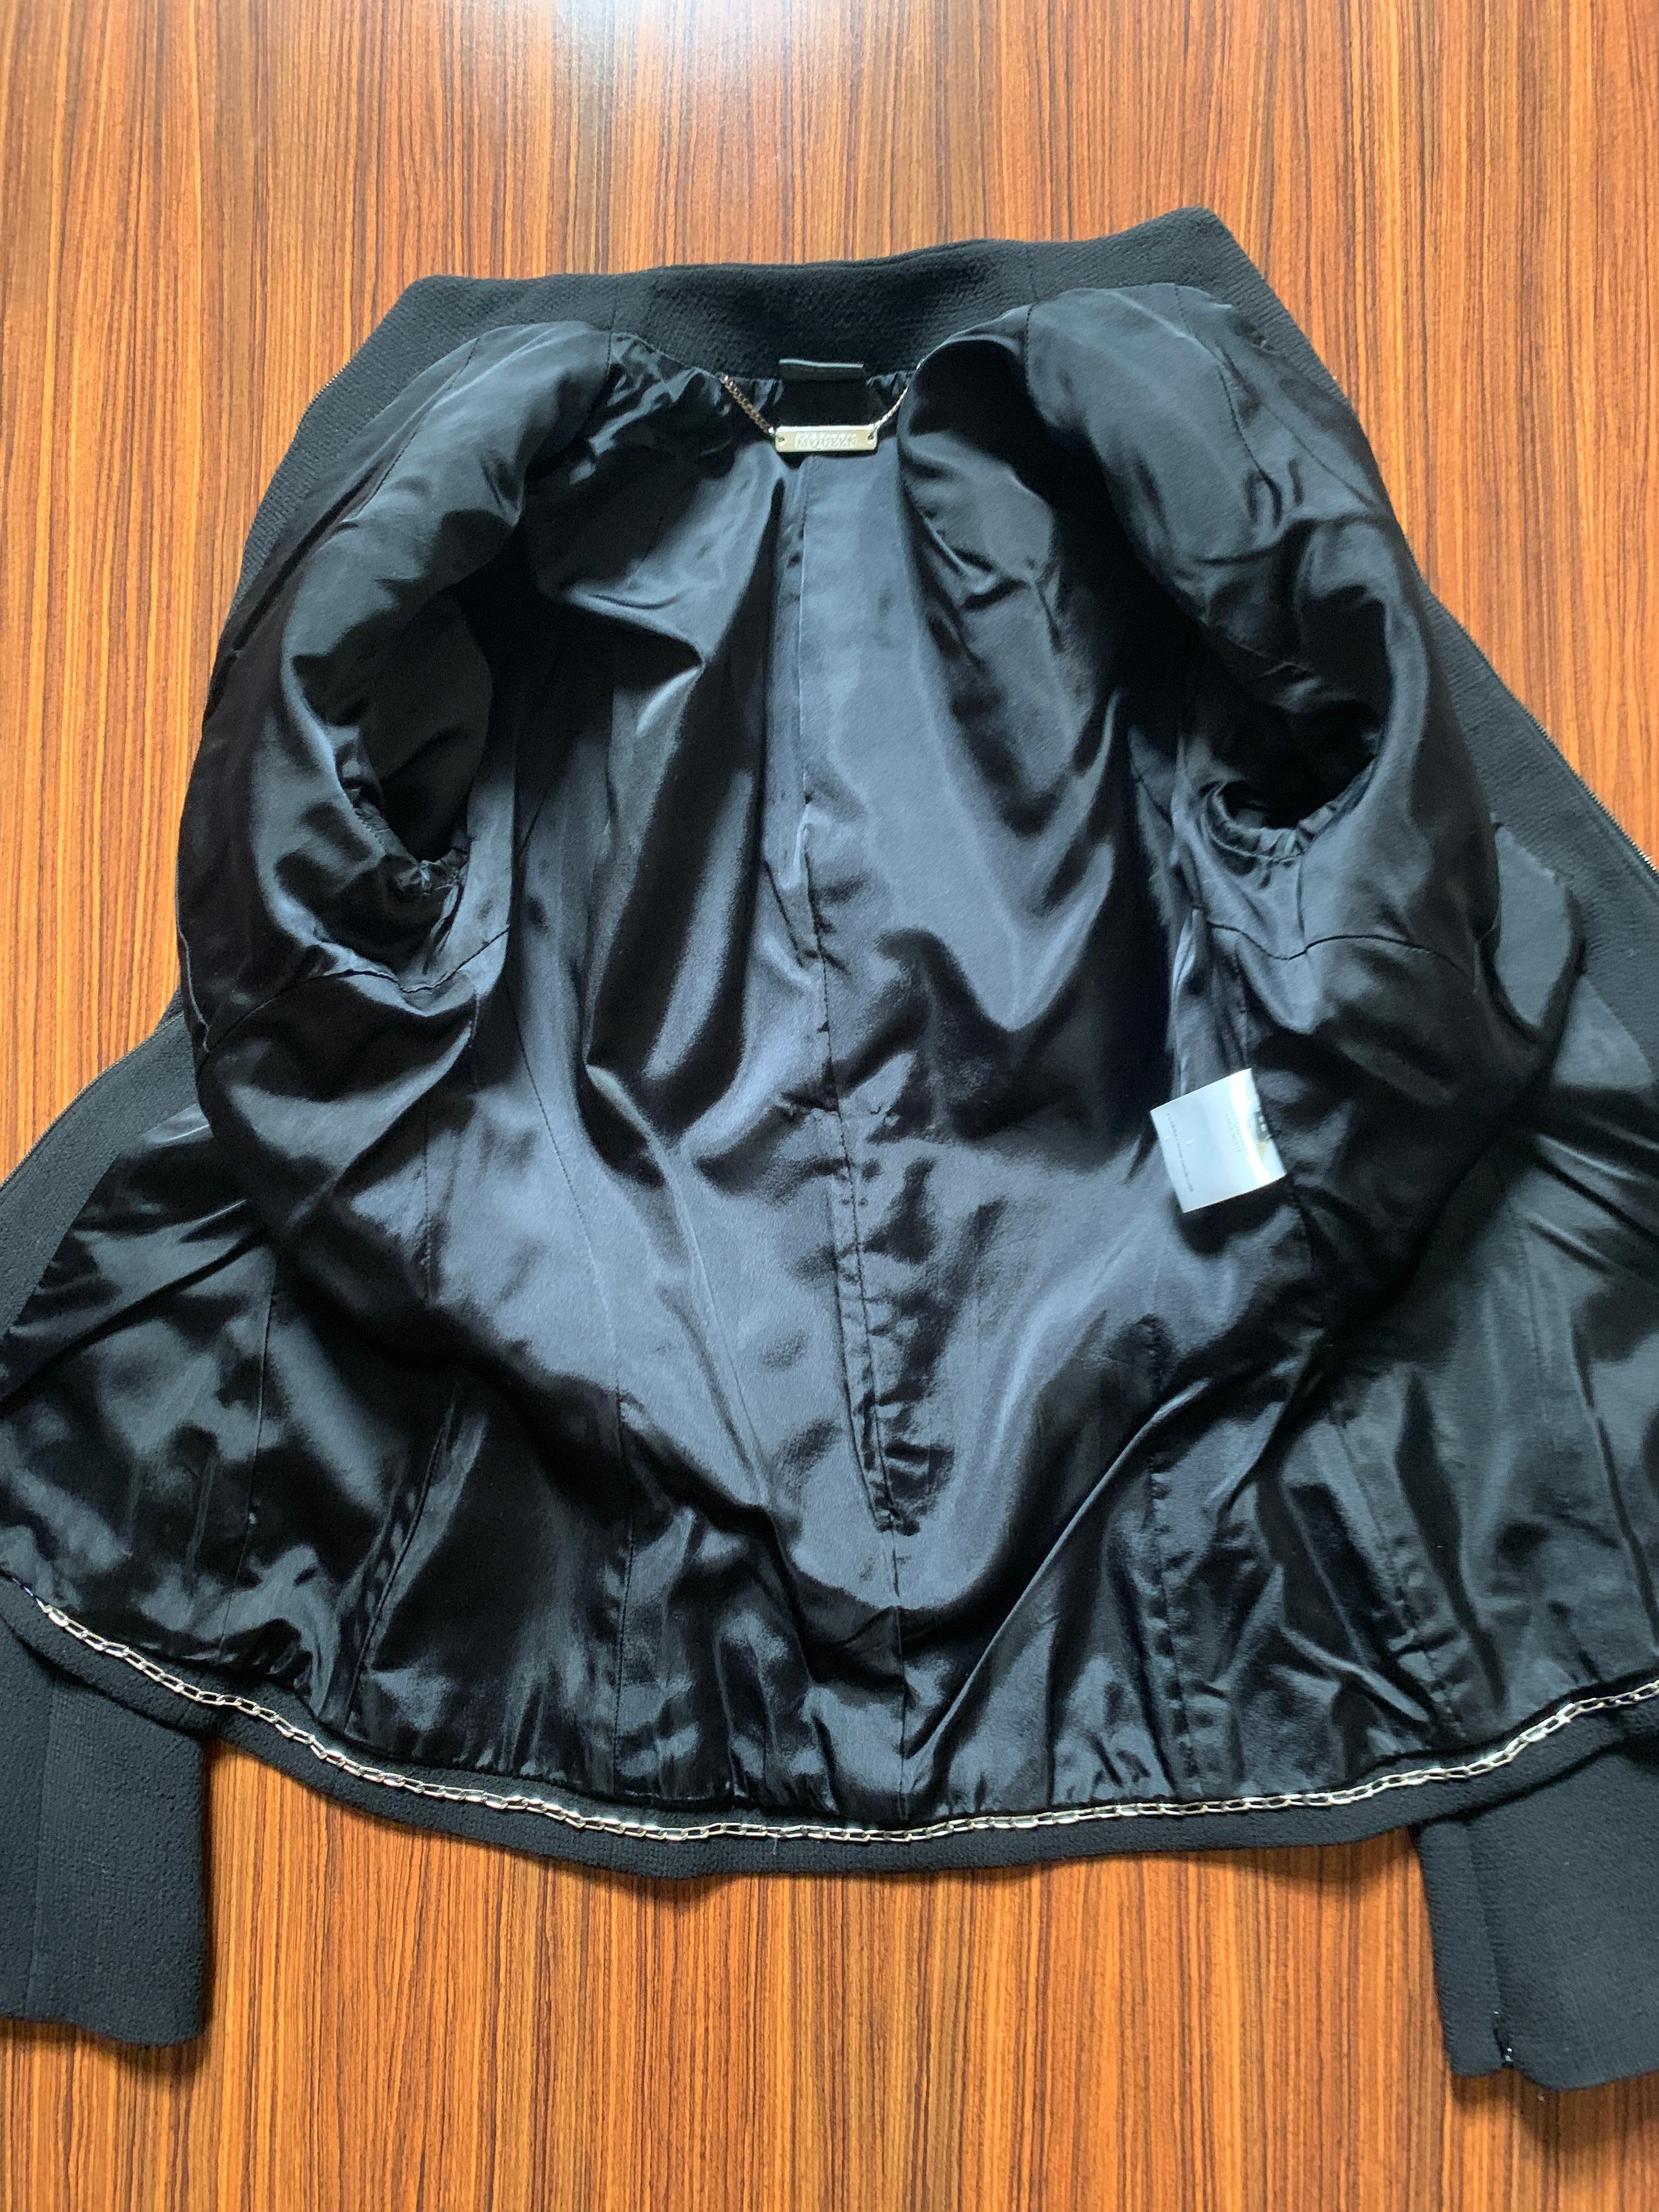 Alexander McQueen 2004 Black Tailored Jacket with White Stitch Detail 3